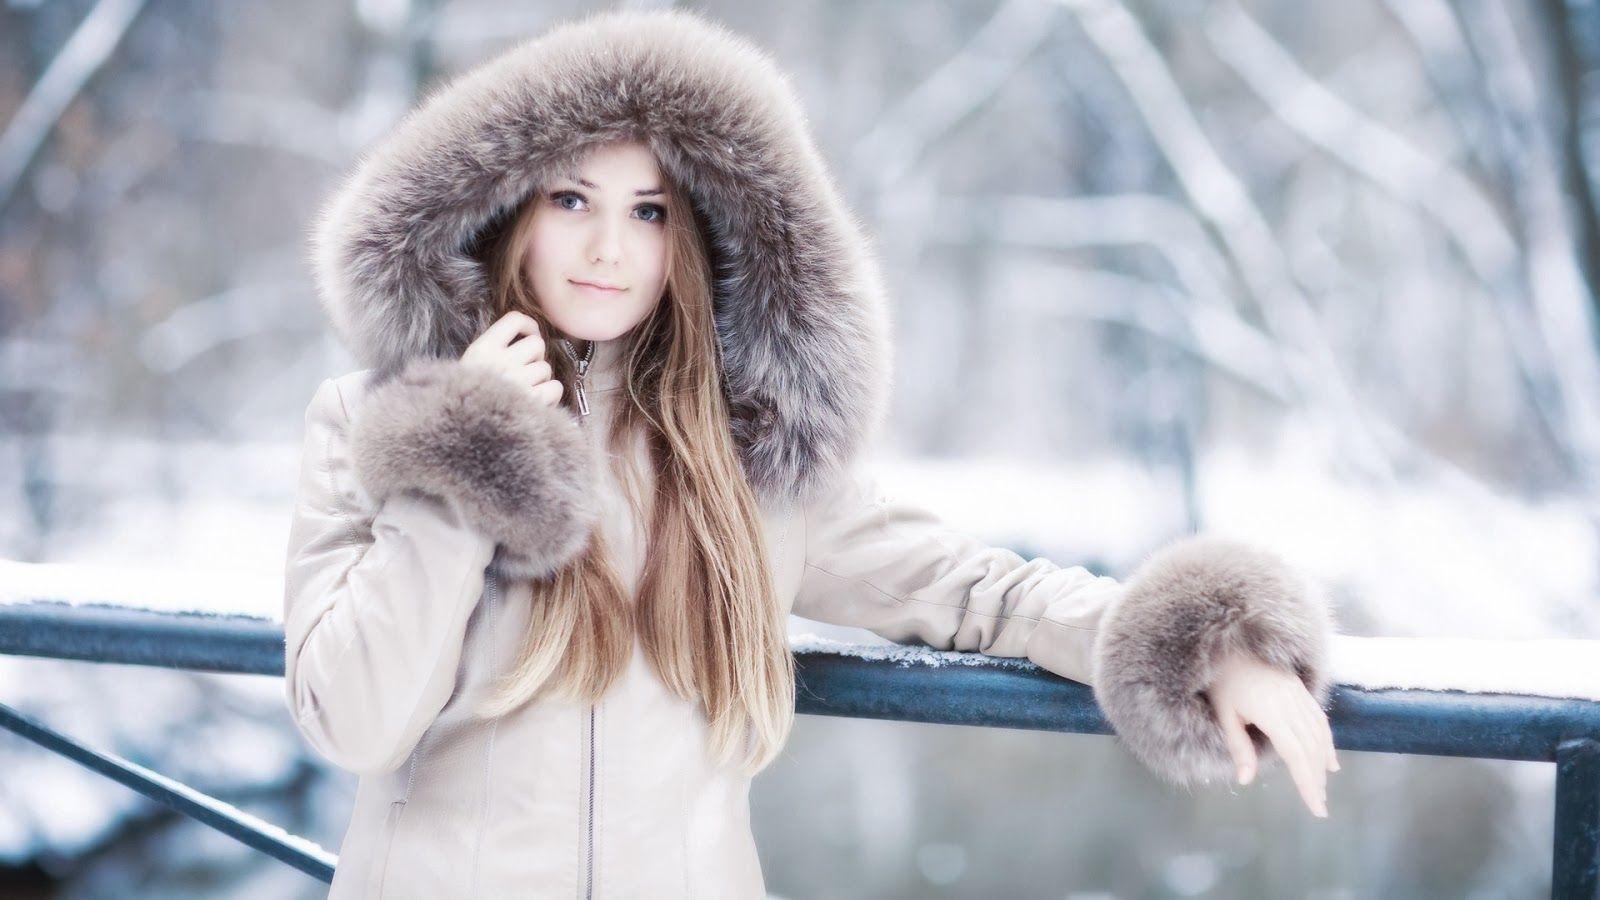 Winter Girl HD Wallpaper, Get Free top quality Winter Girl